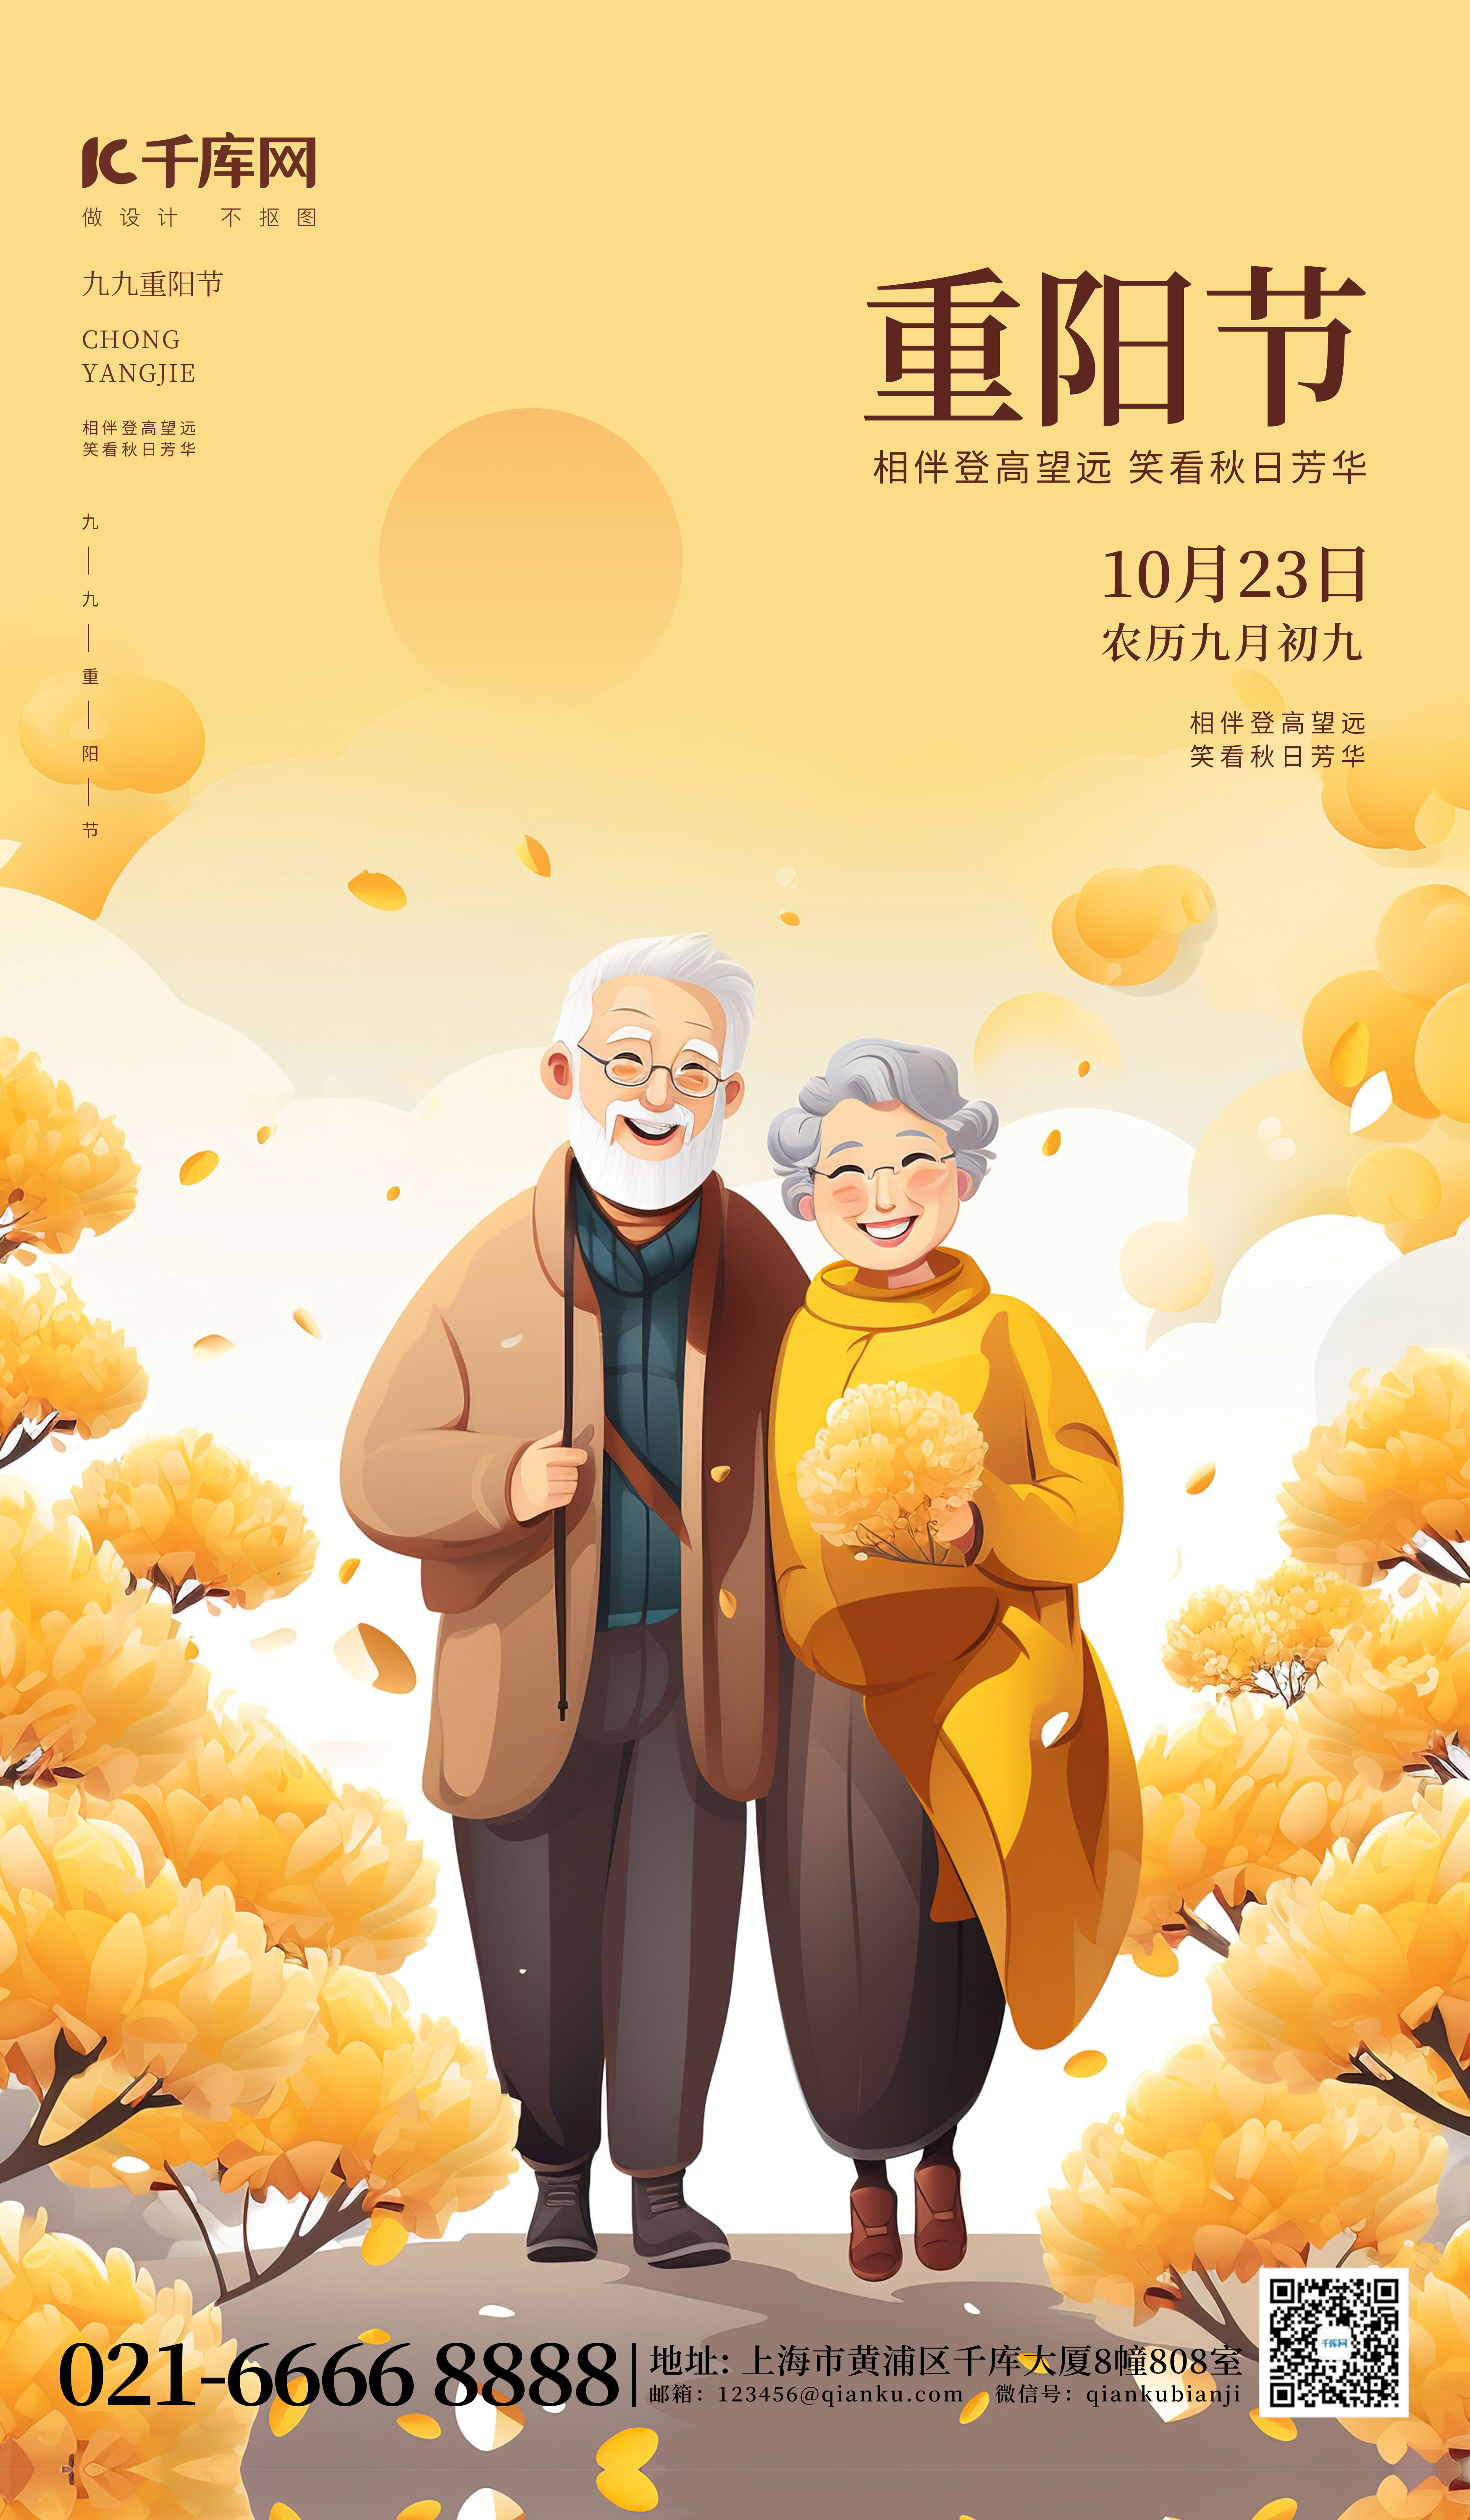 AIGC重阳节老人暖色中国风插画海报图片